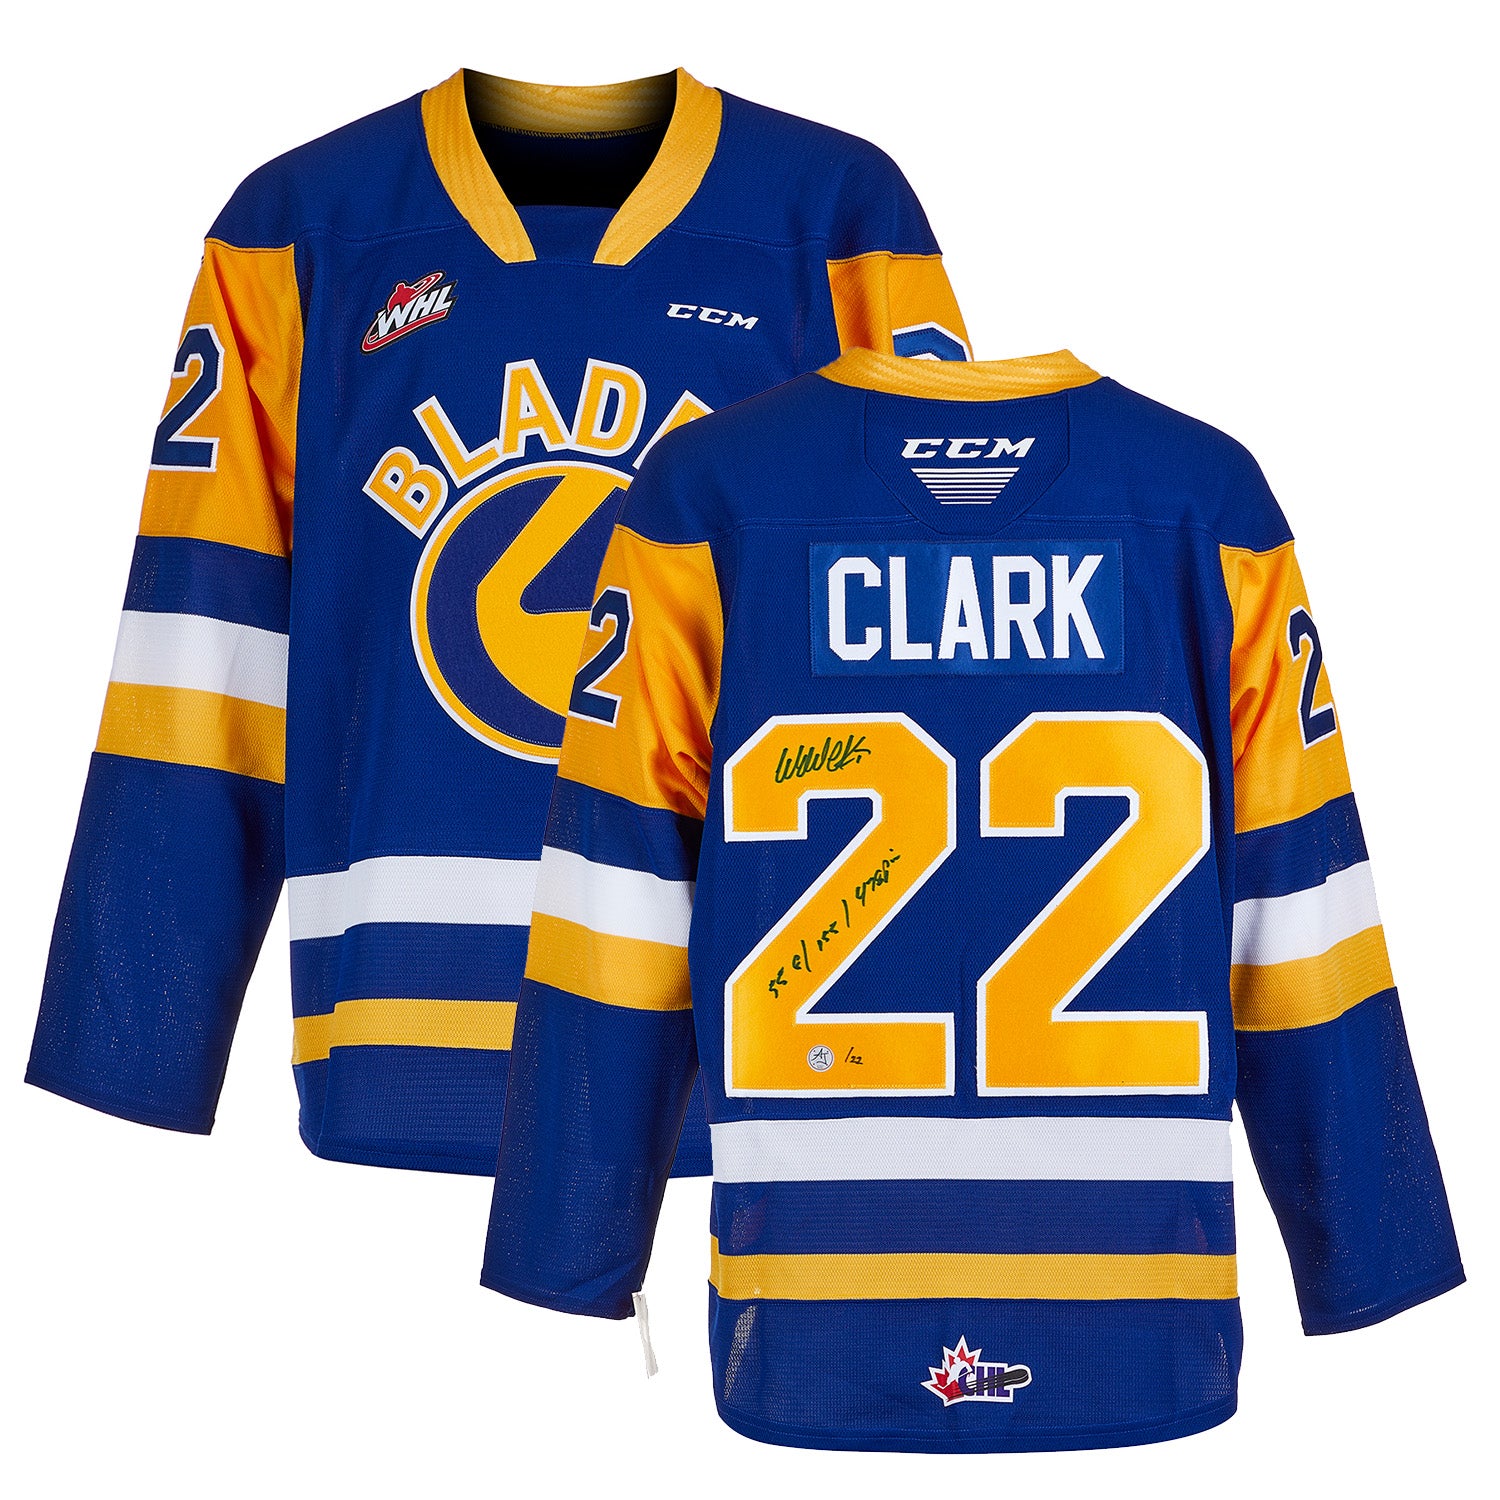 WHL Regina Pats x Toronto Blue Jays Team signed Hockey jersey autographed